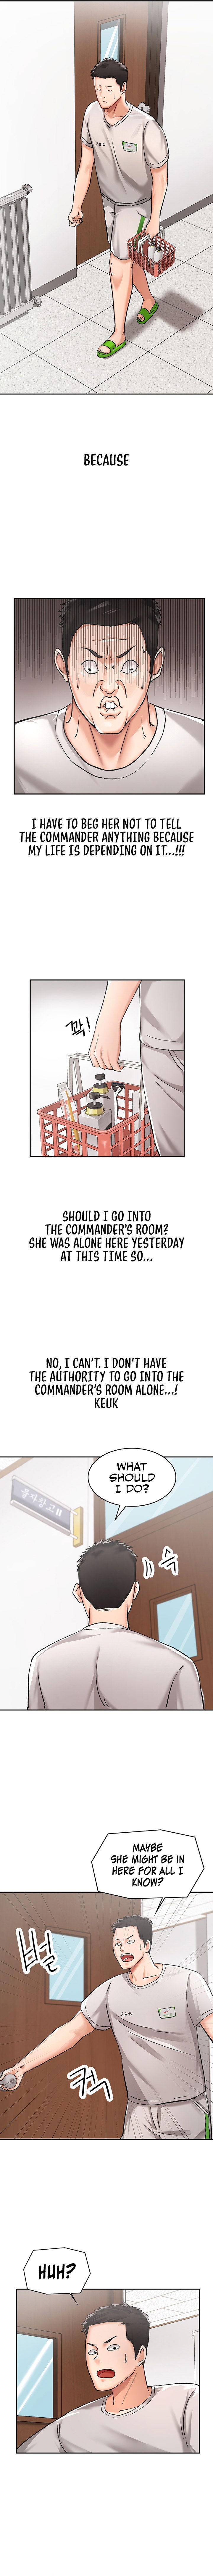 the-commanders-daughter-chap-3-11